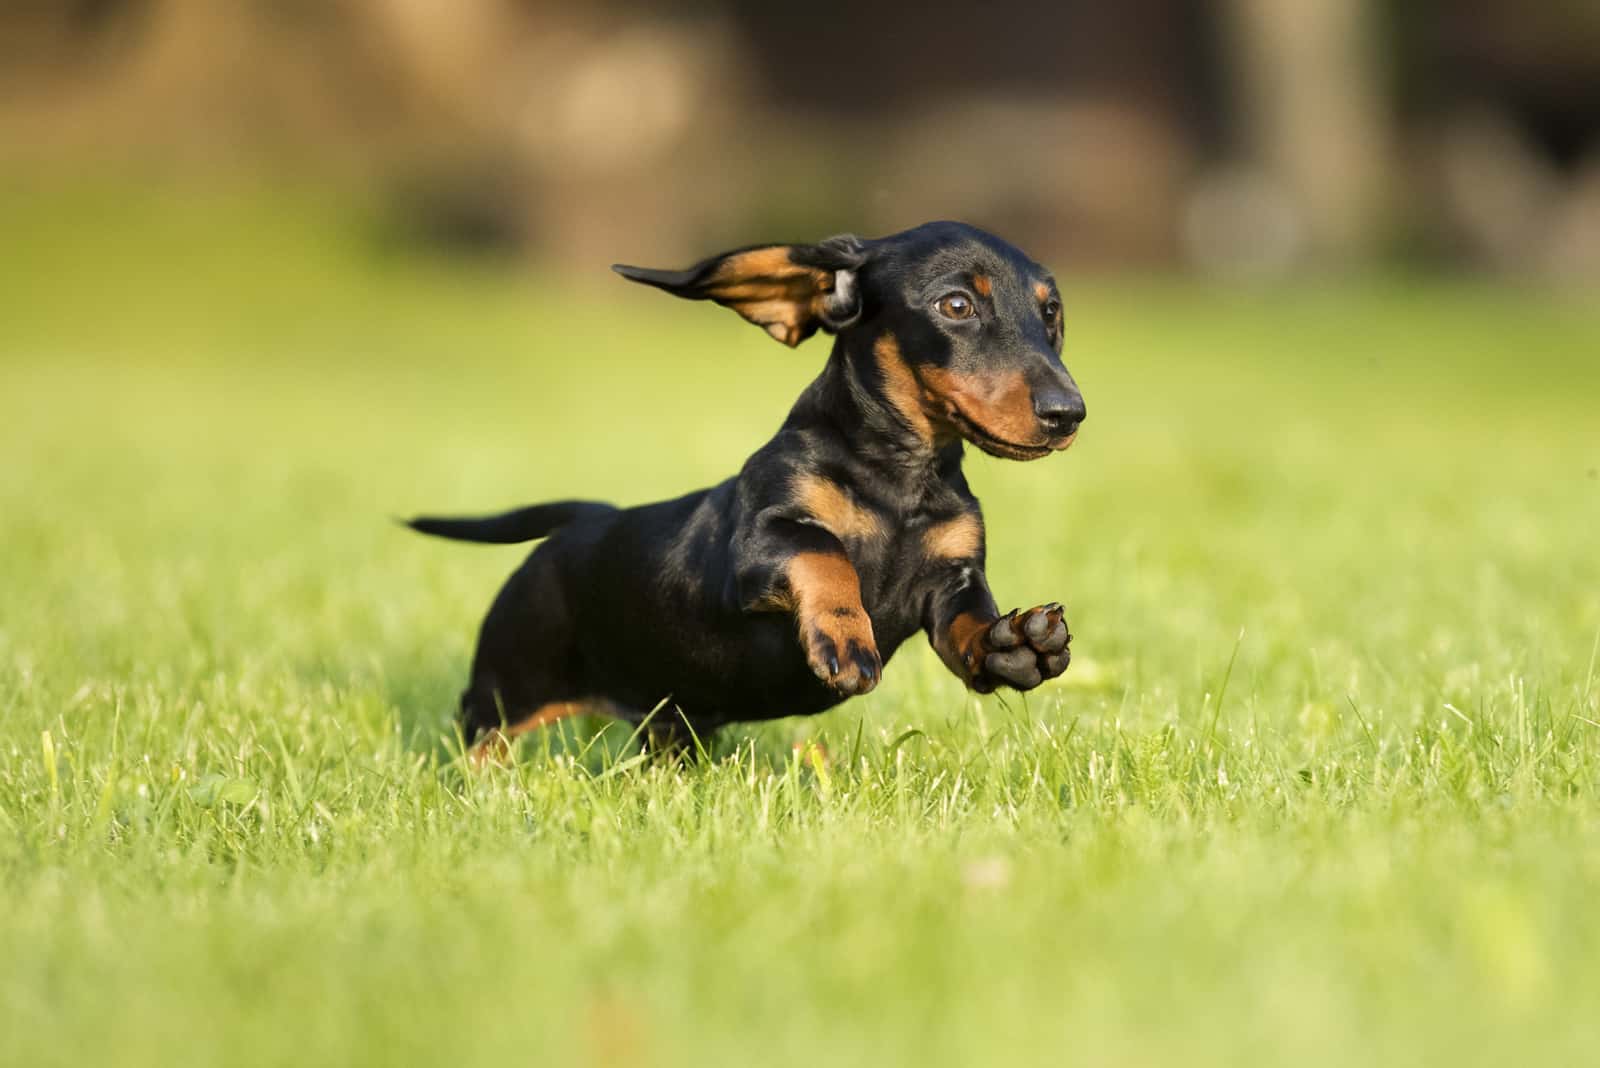 dachshund dog running in the grass